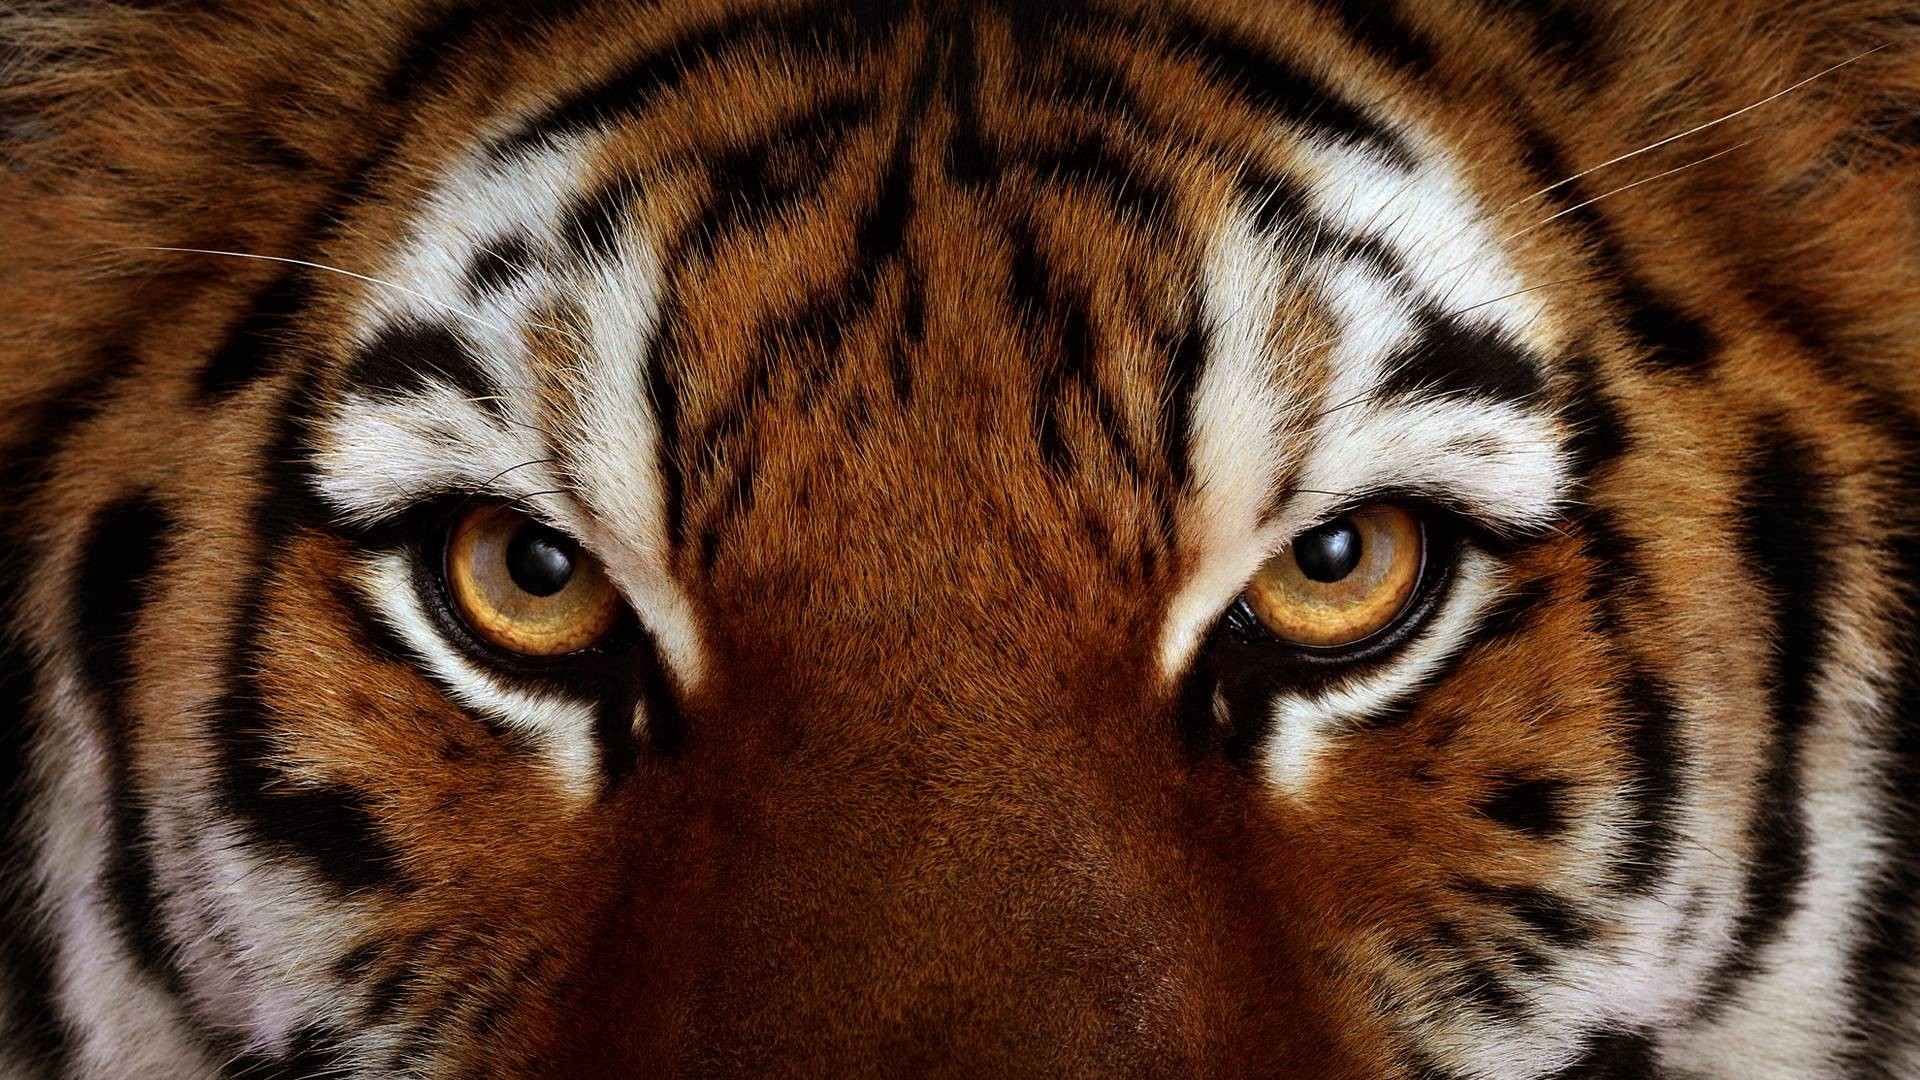 1920x1080, Drawn Tigres Angry Lion Face - Tiger Eyes Close Up - 1920x1080  Wallpaper 